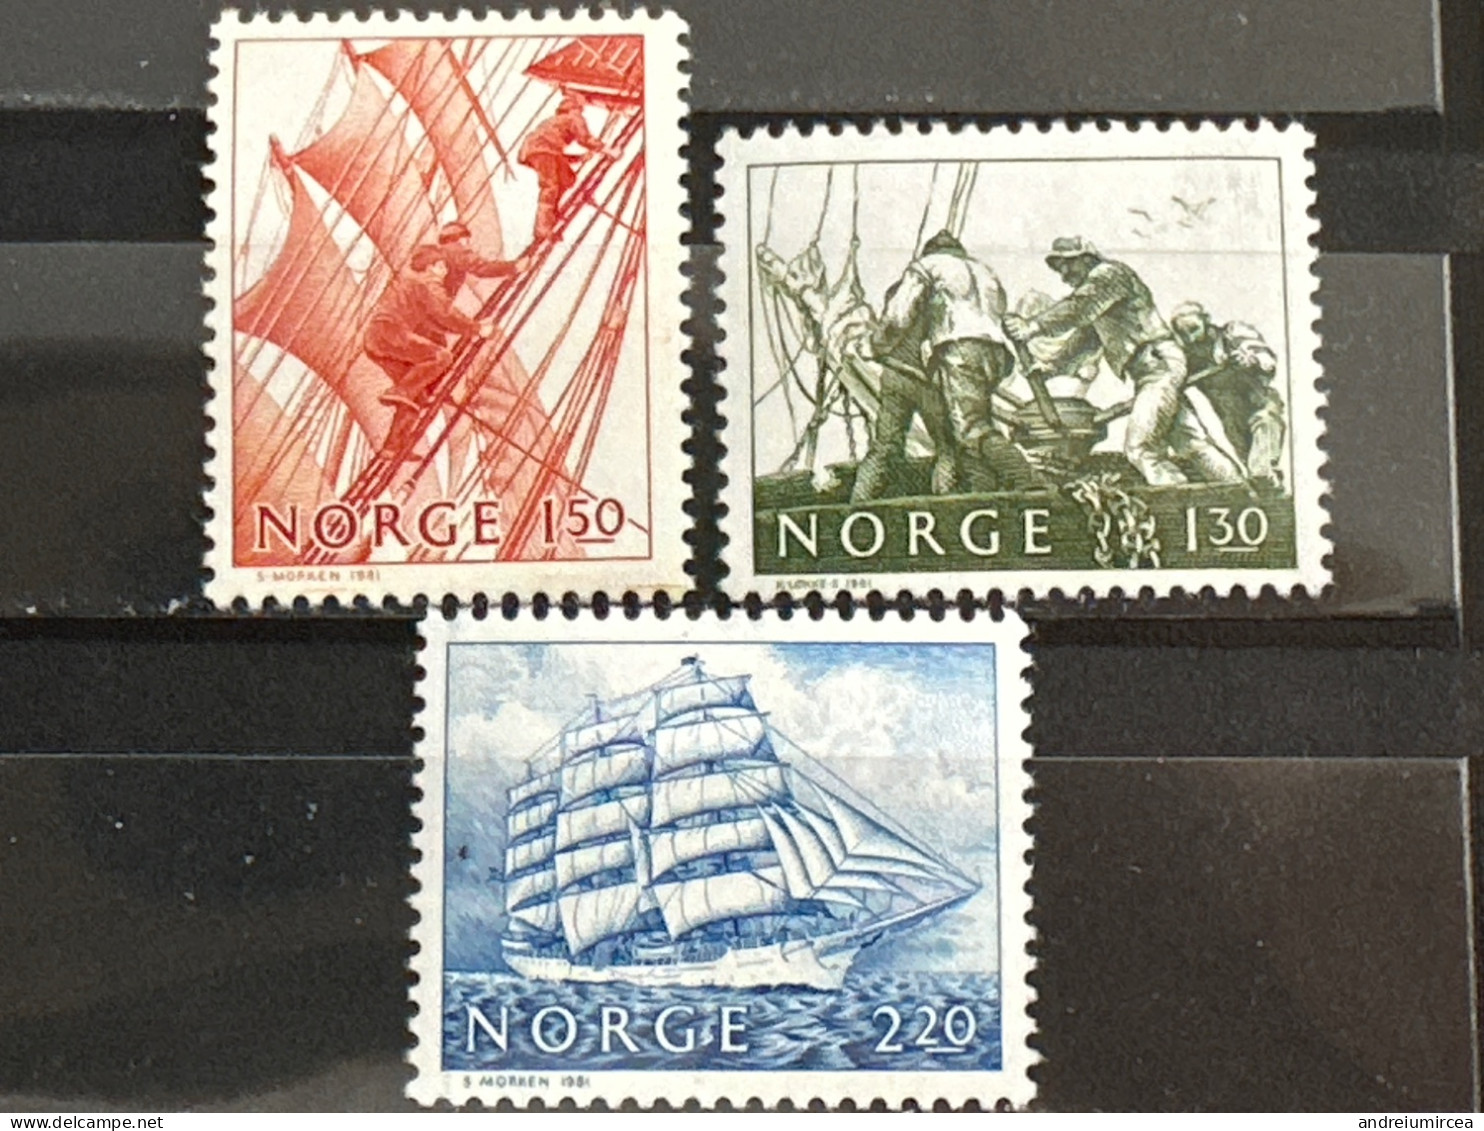 Norvege MNH 1981 - Nuevos